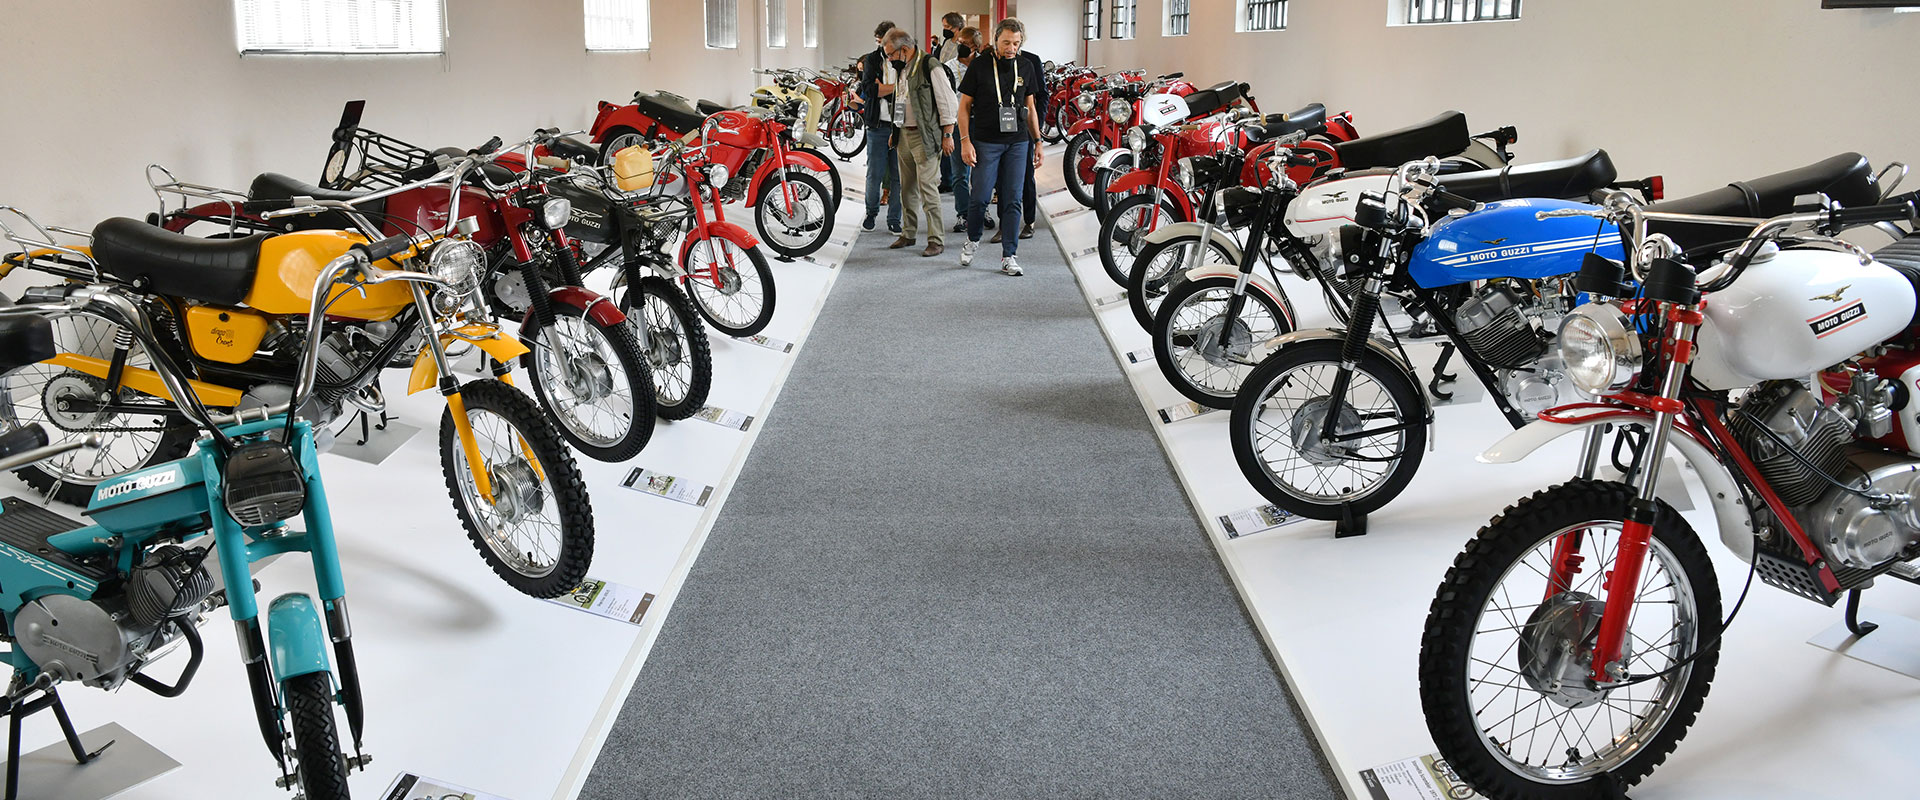 Moto Moto Museum - Travel Warehouse Zambia